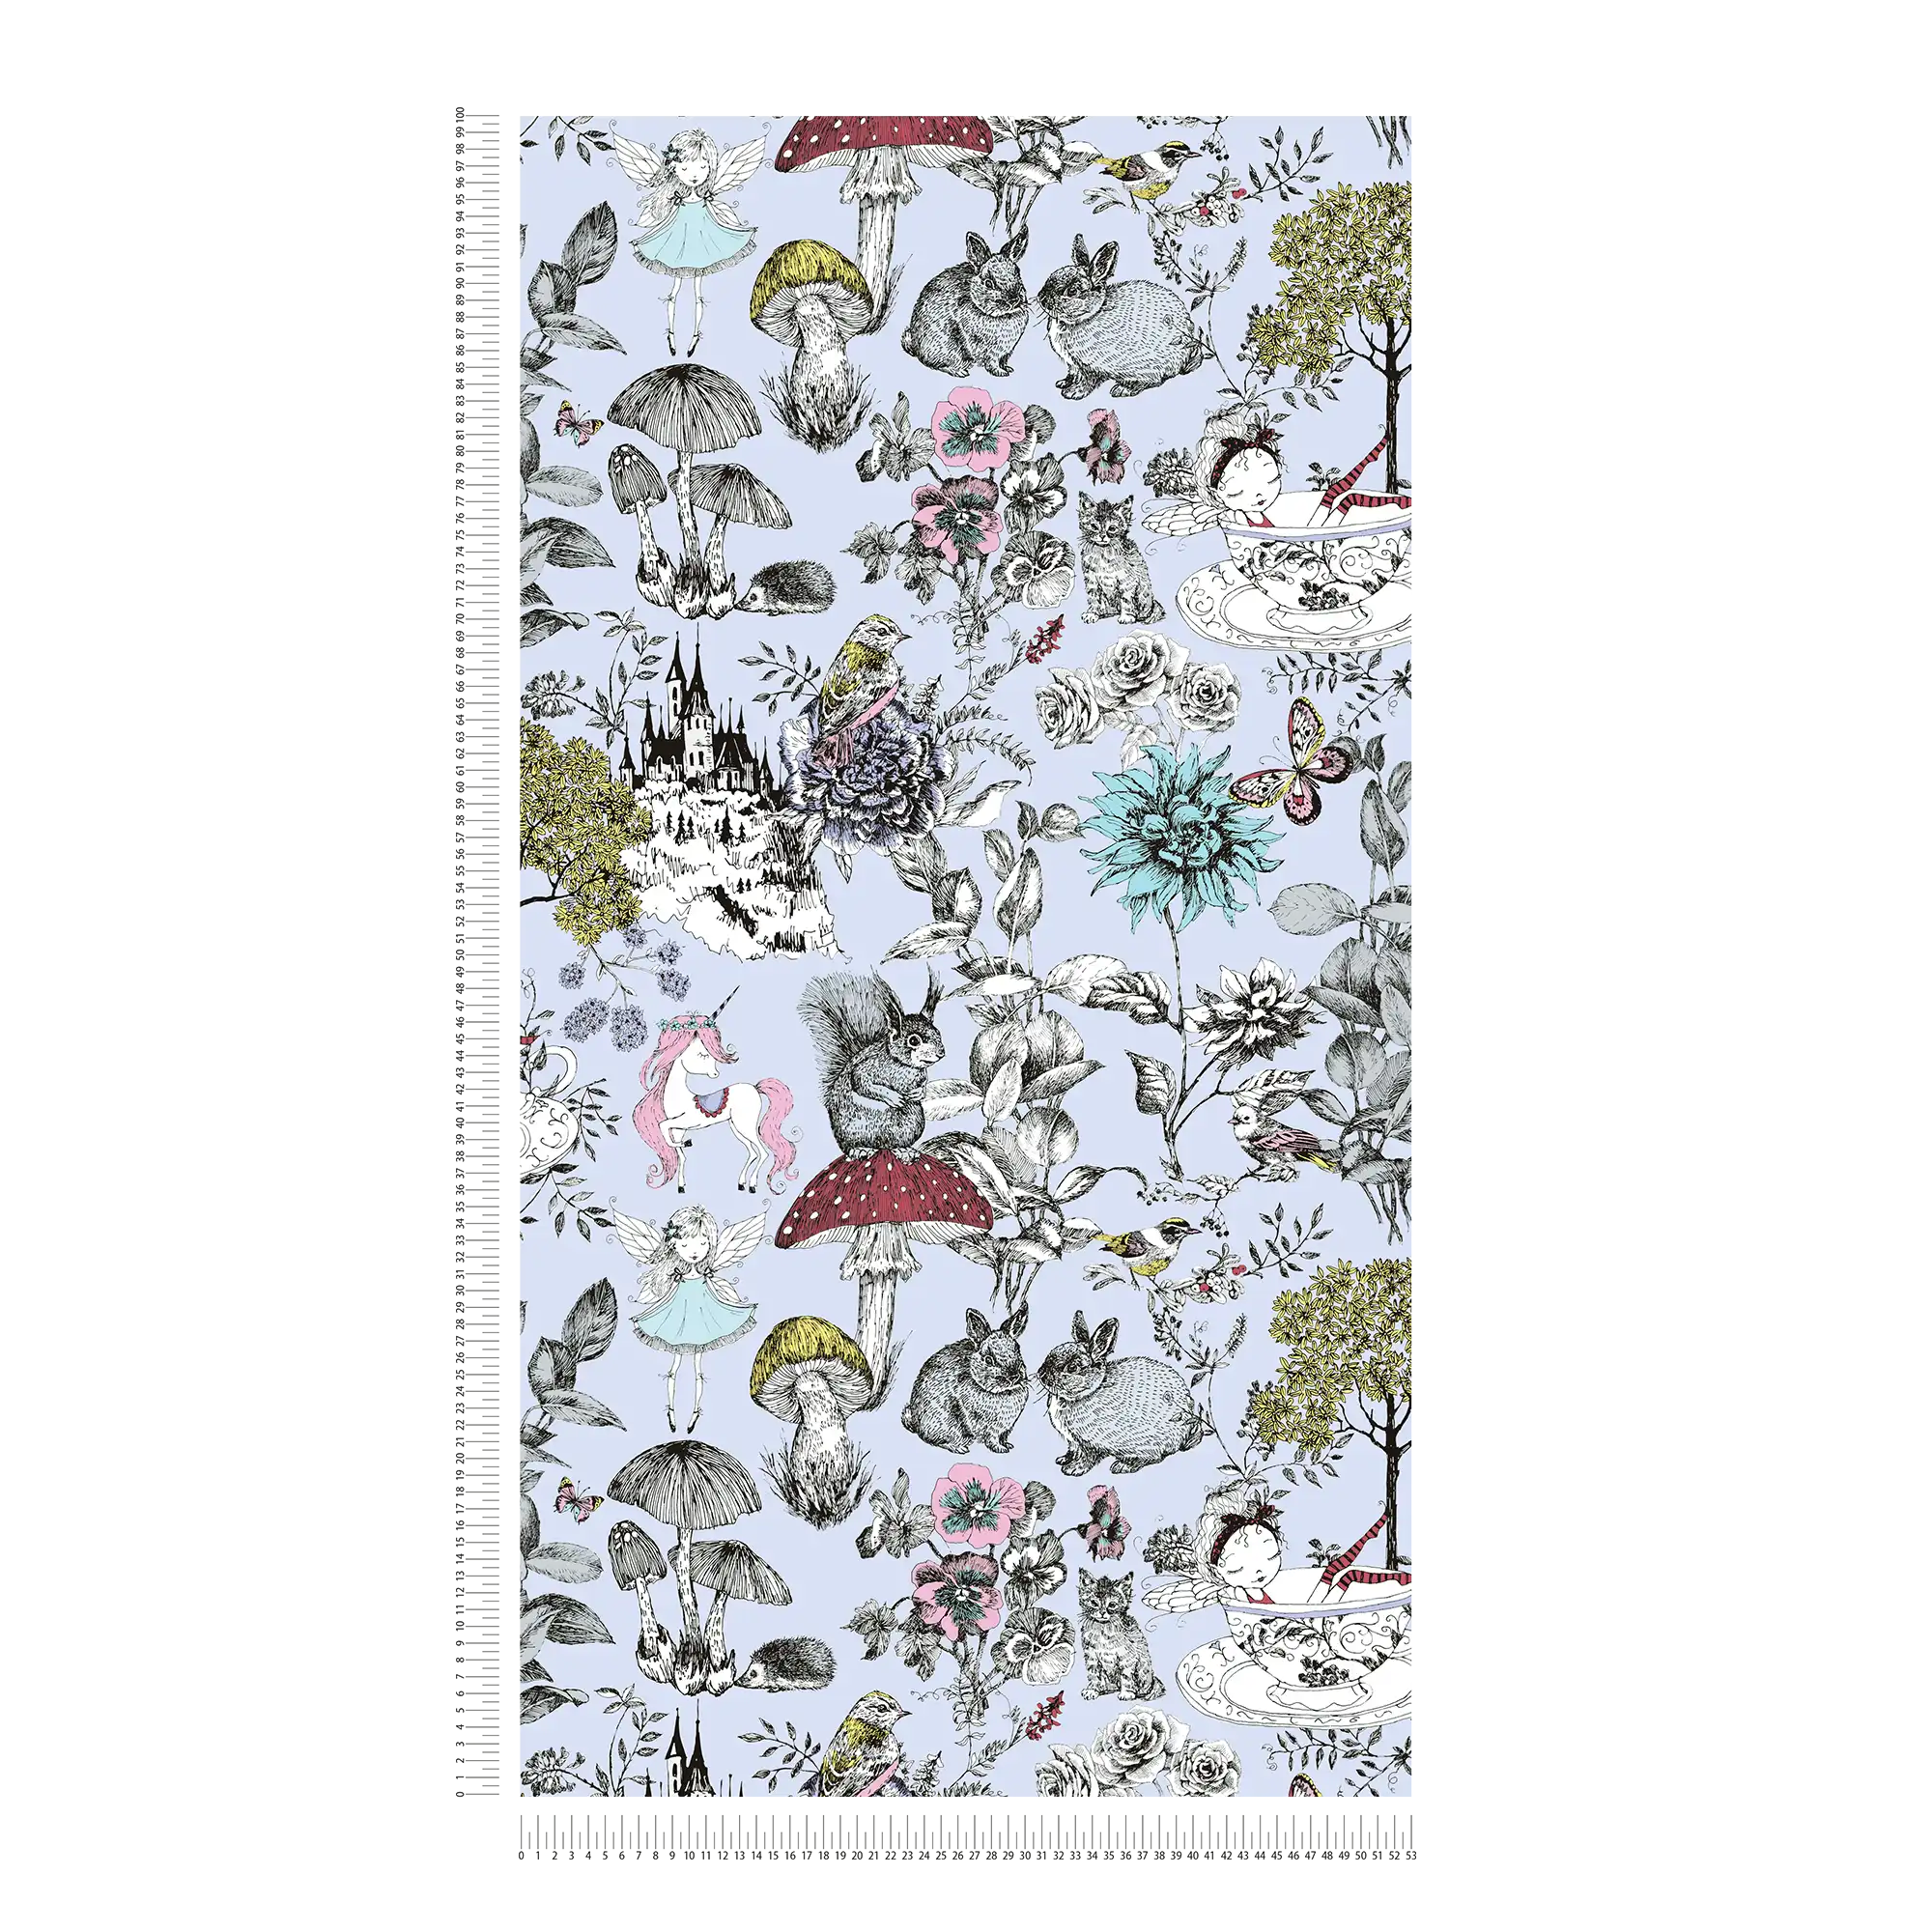             Fairies wallpaper forest motif Nursery - grey, black, white
        